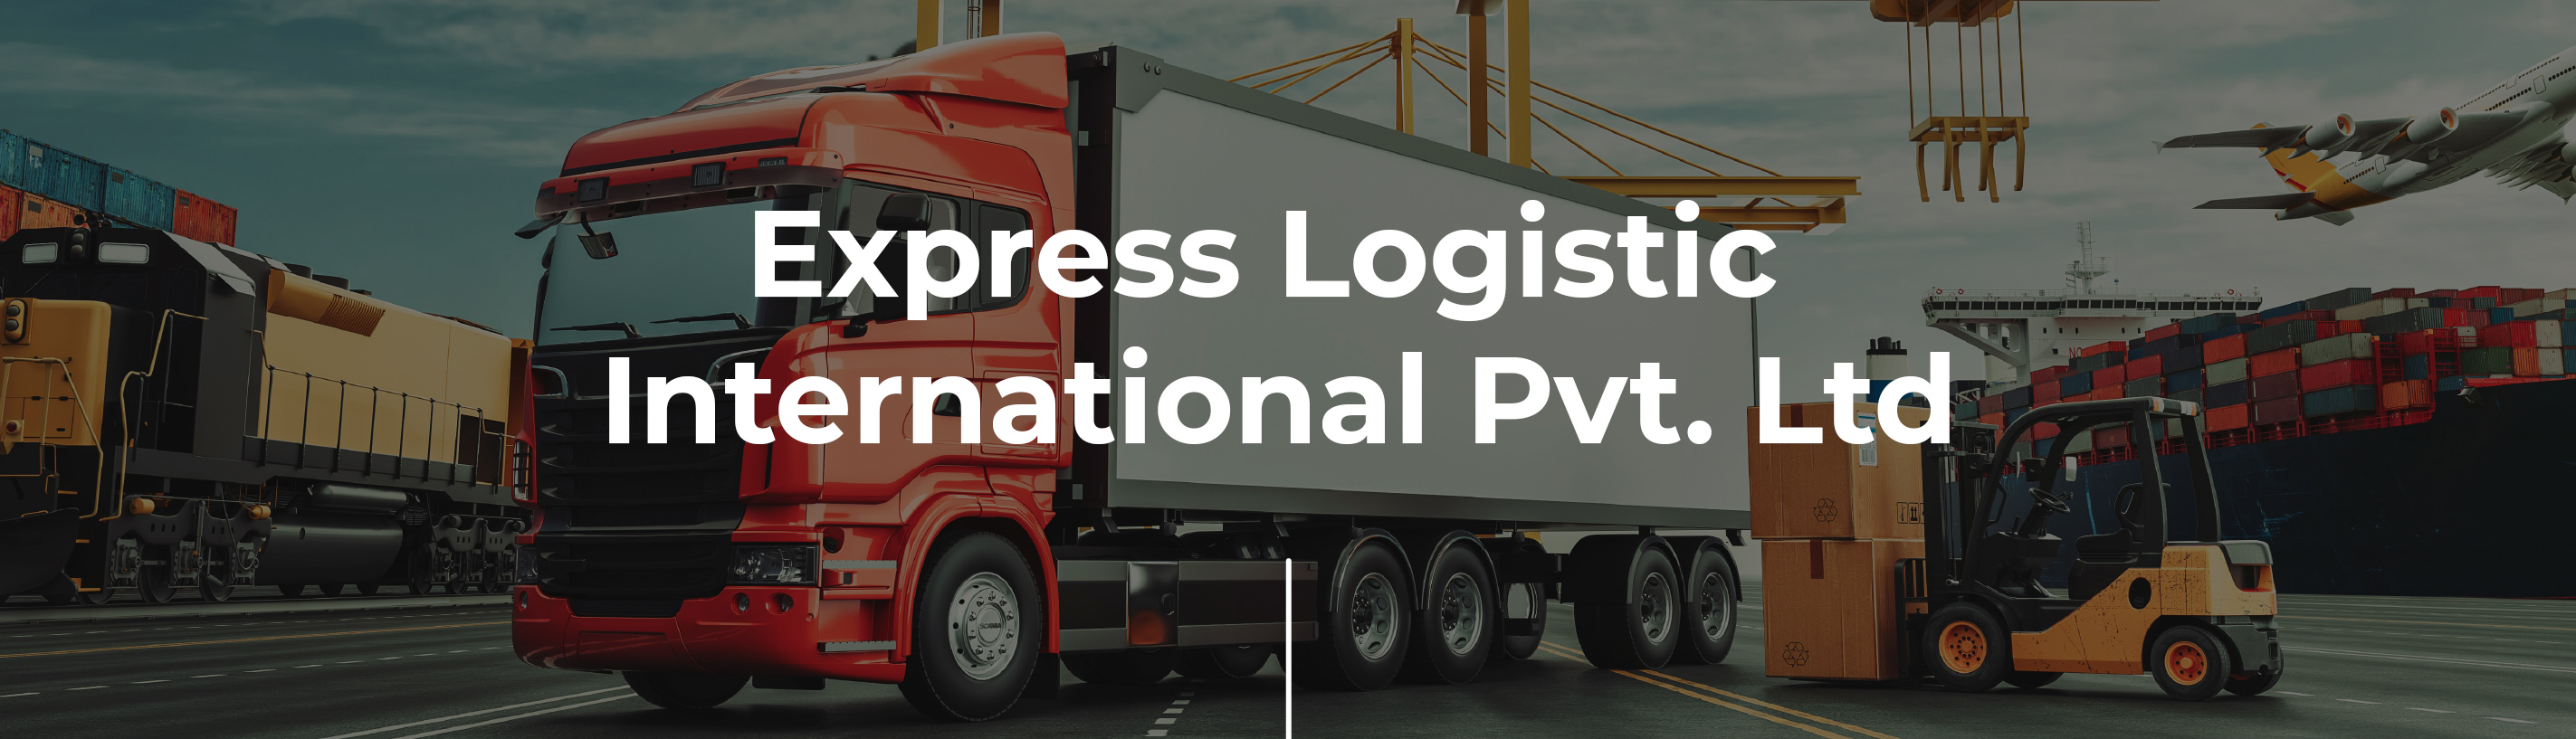 header image of Express Logistic International Pvt. Ltd.